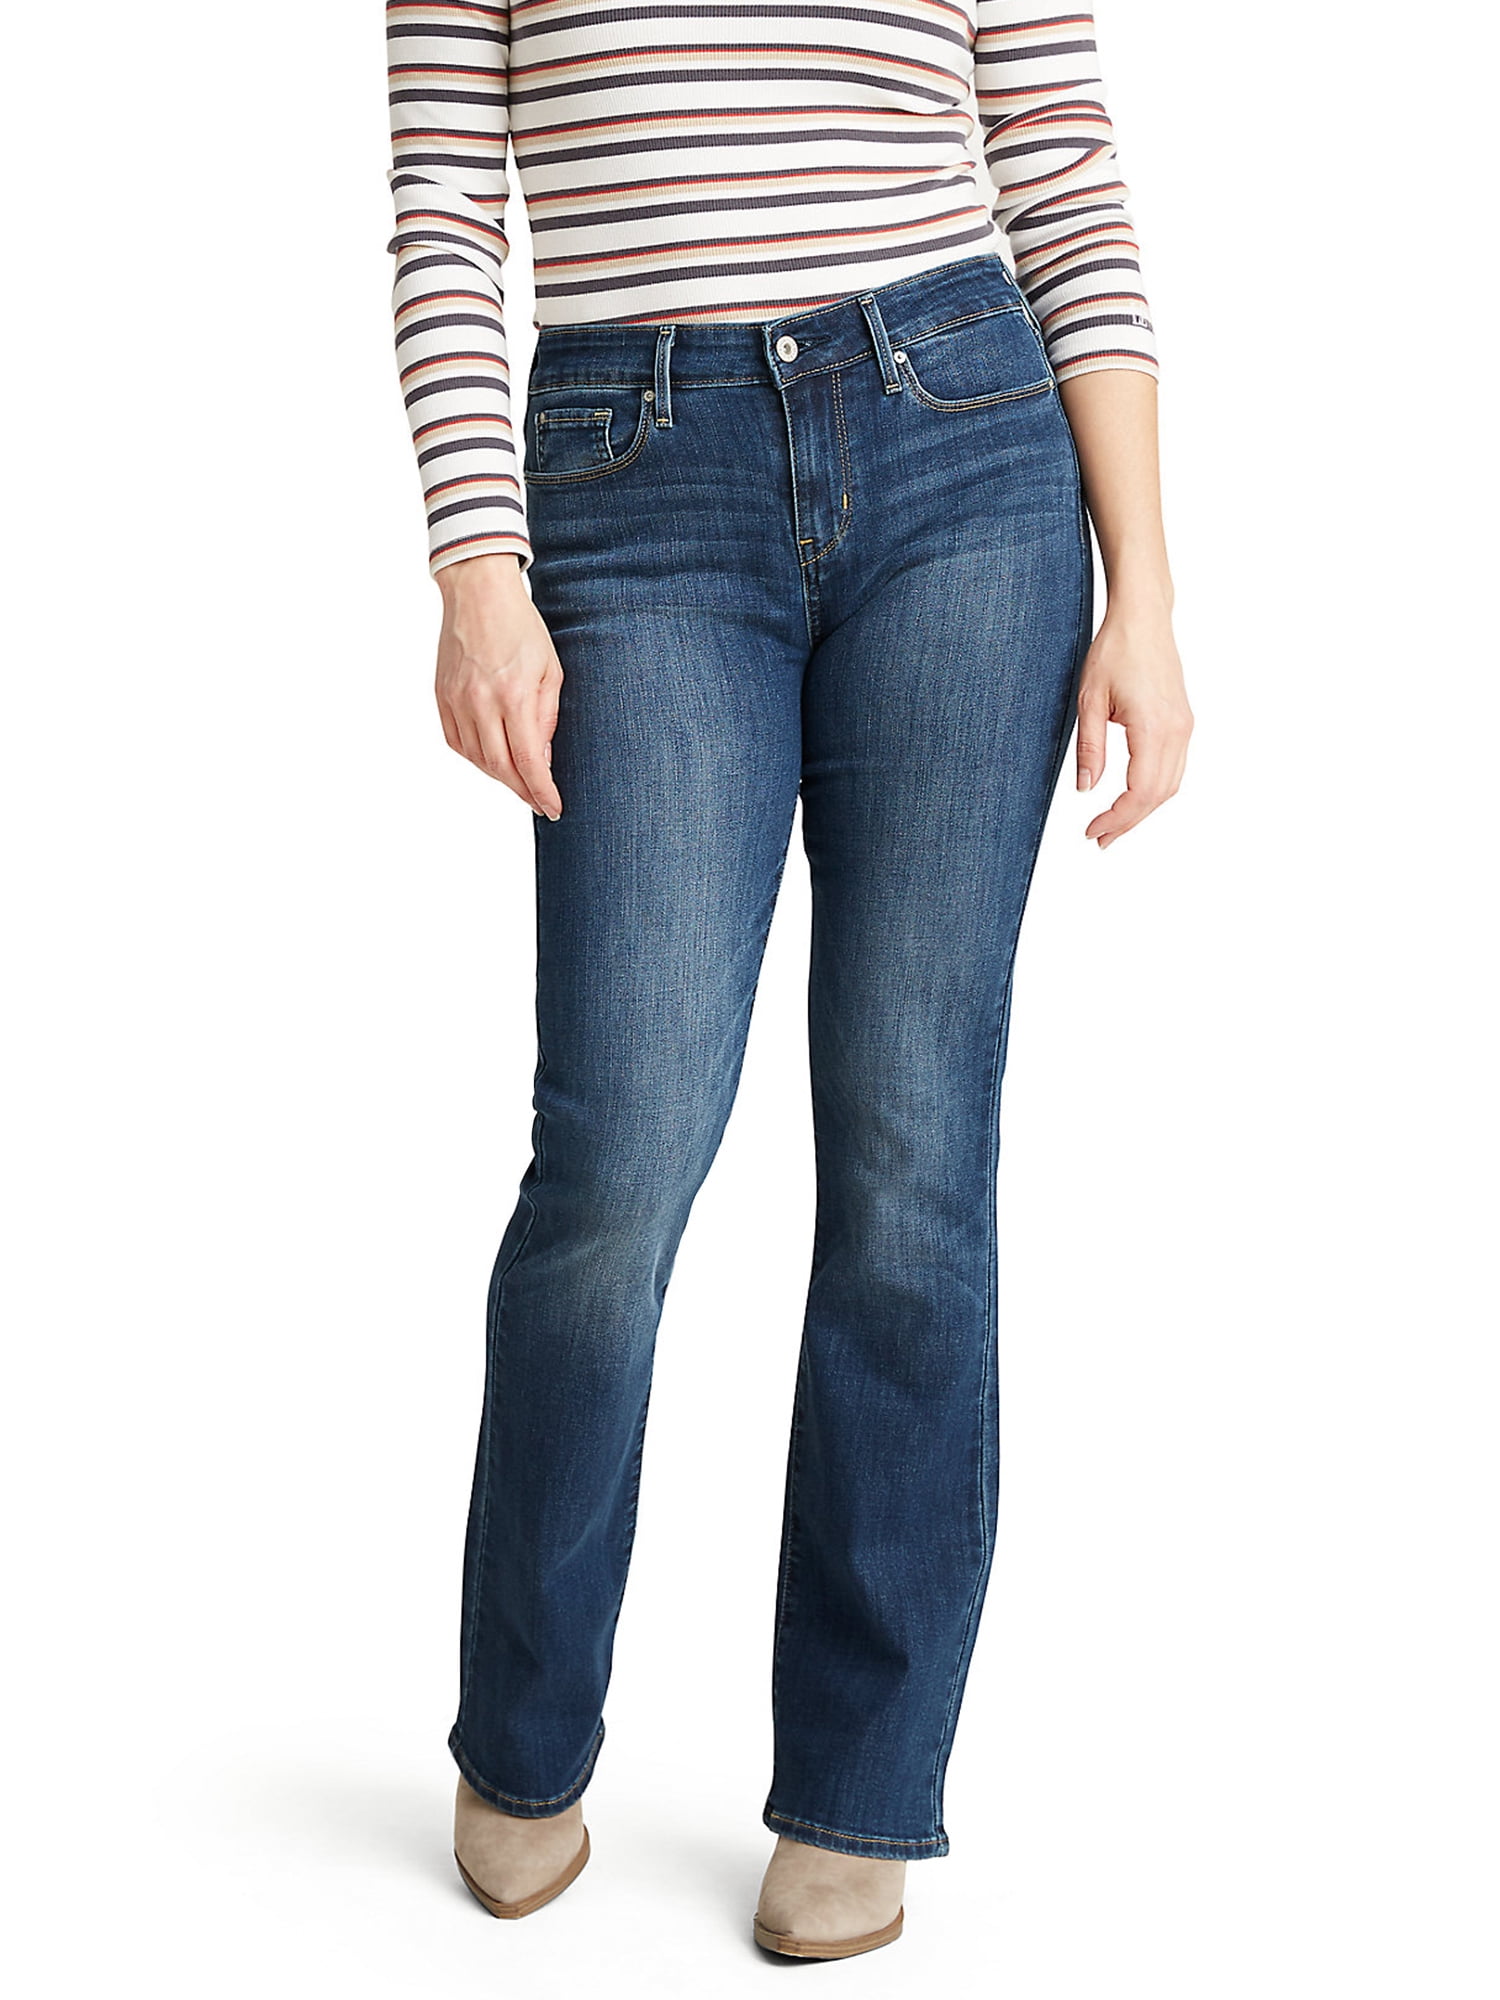 walmart signature jeans